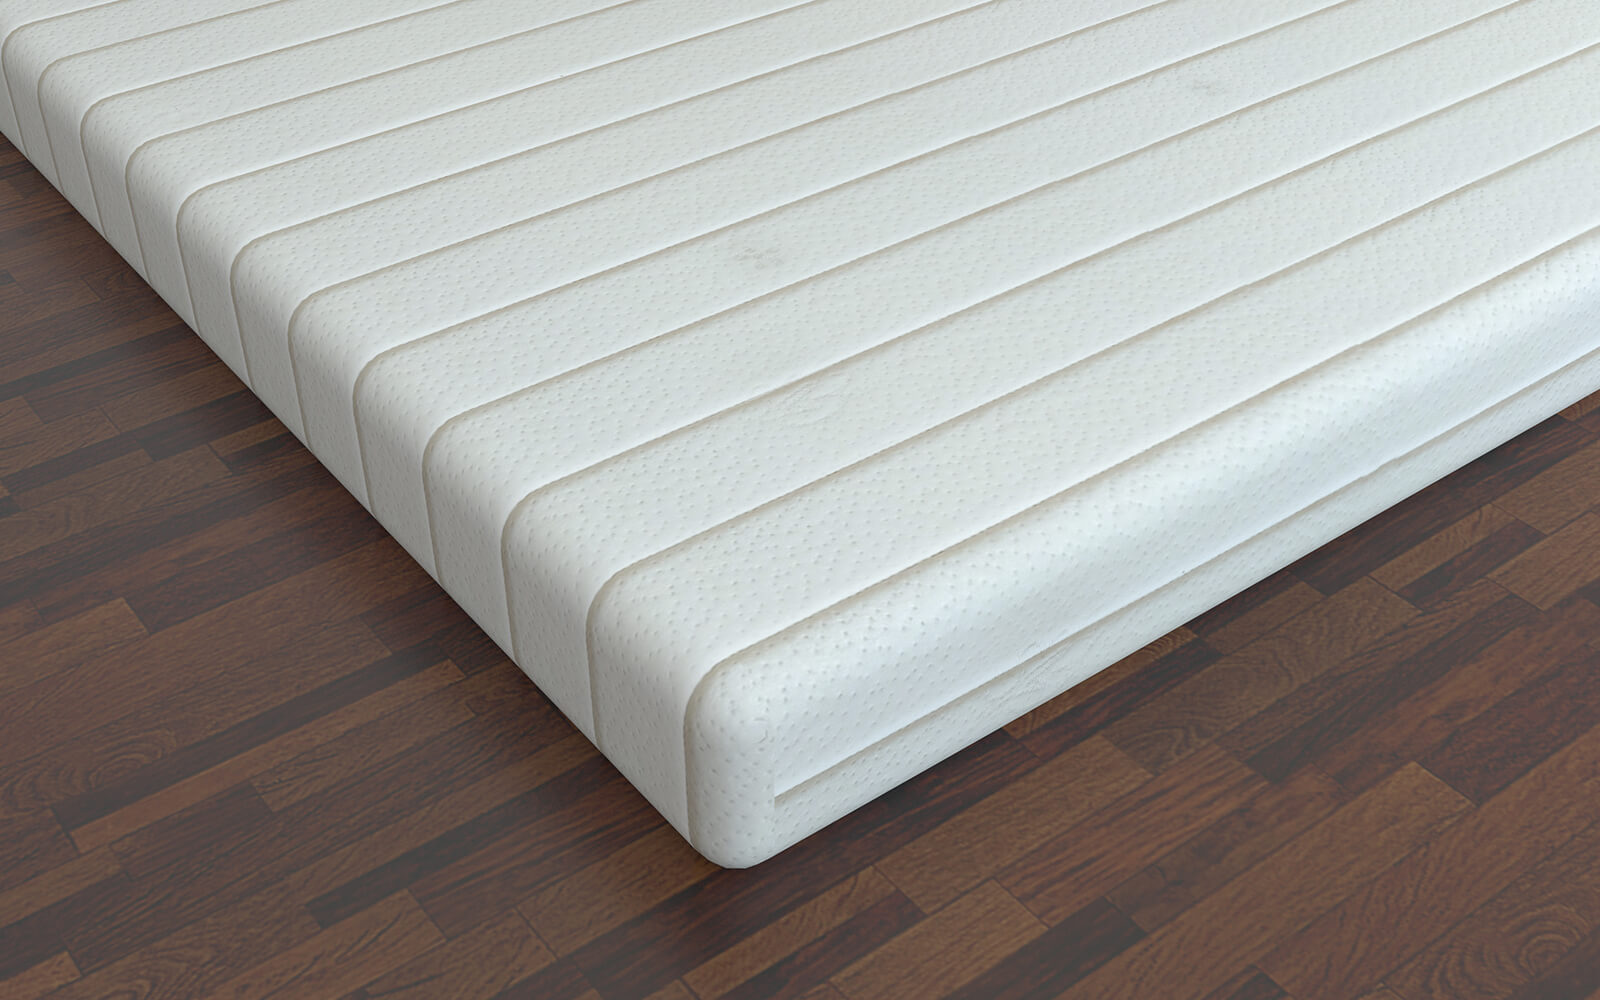 10 inch visco latex foam mattress